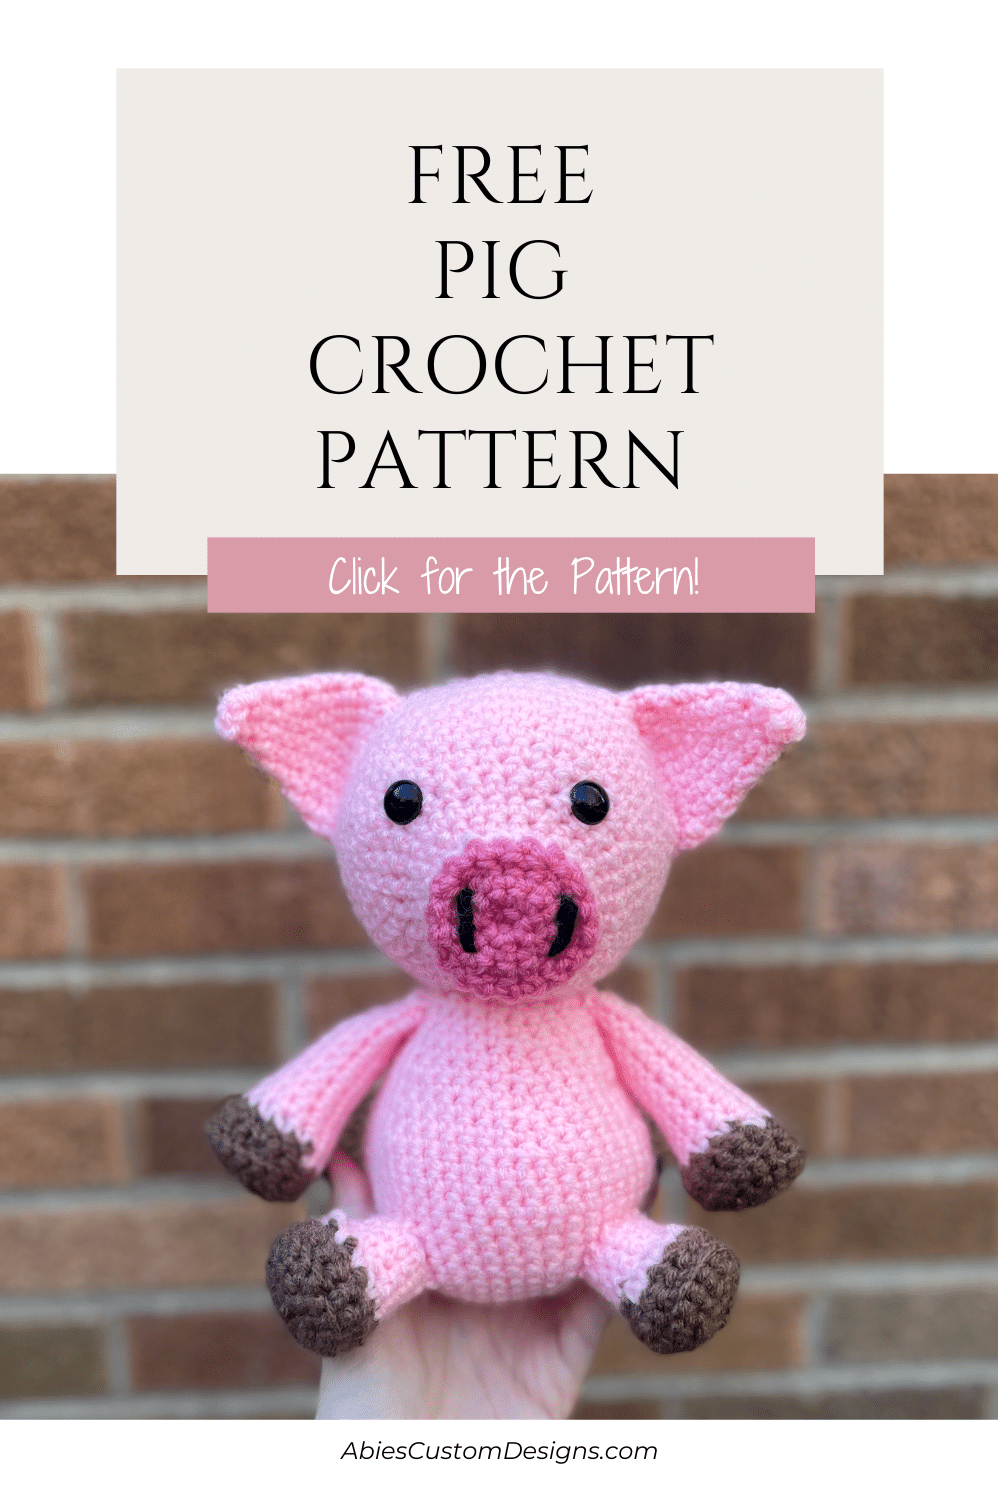 Free Pig Crochet Pattern